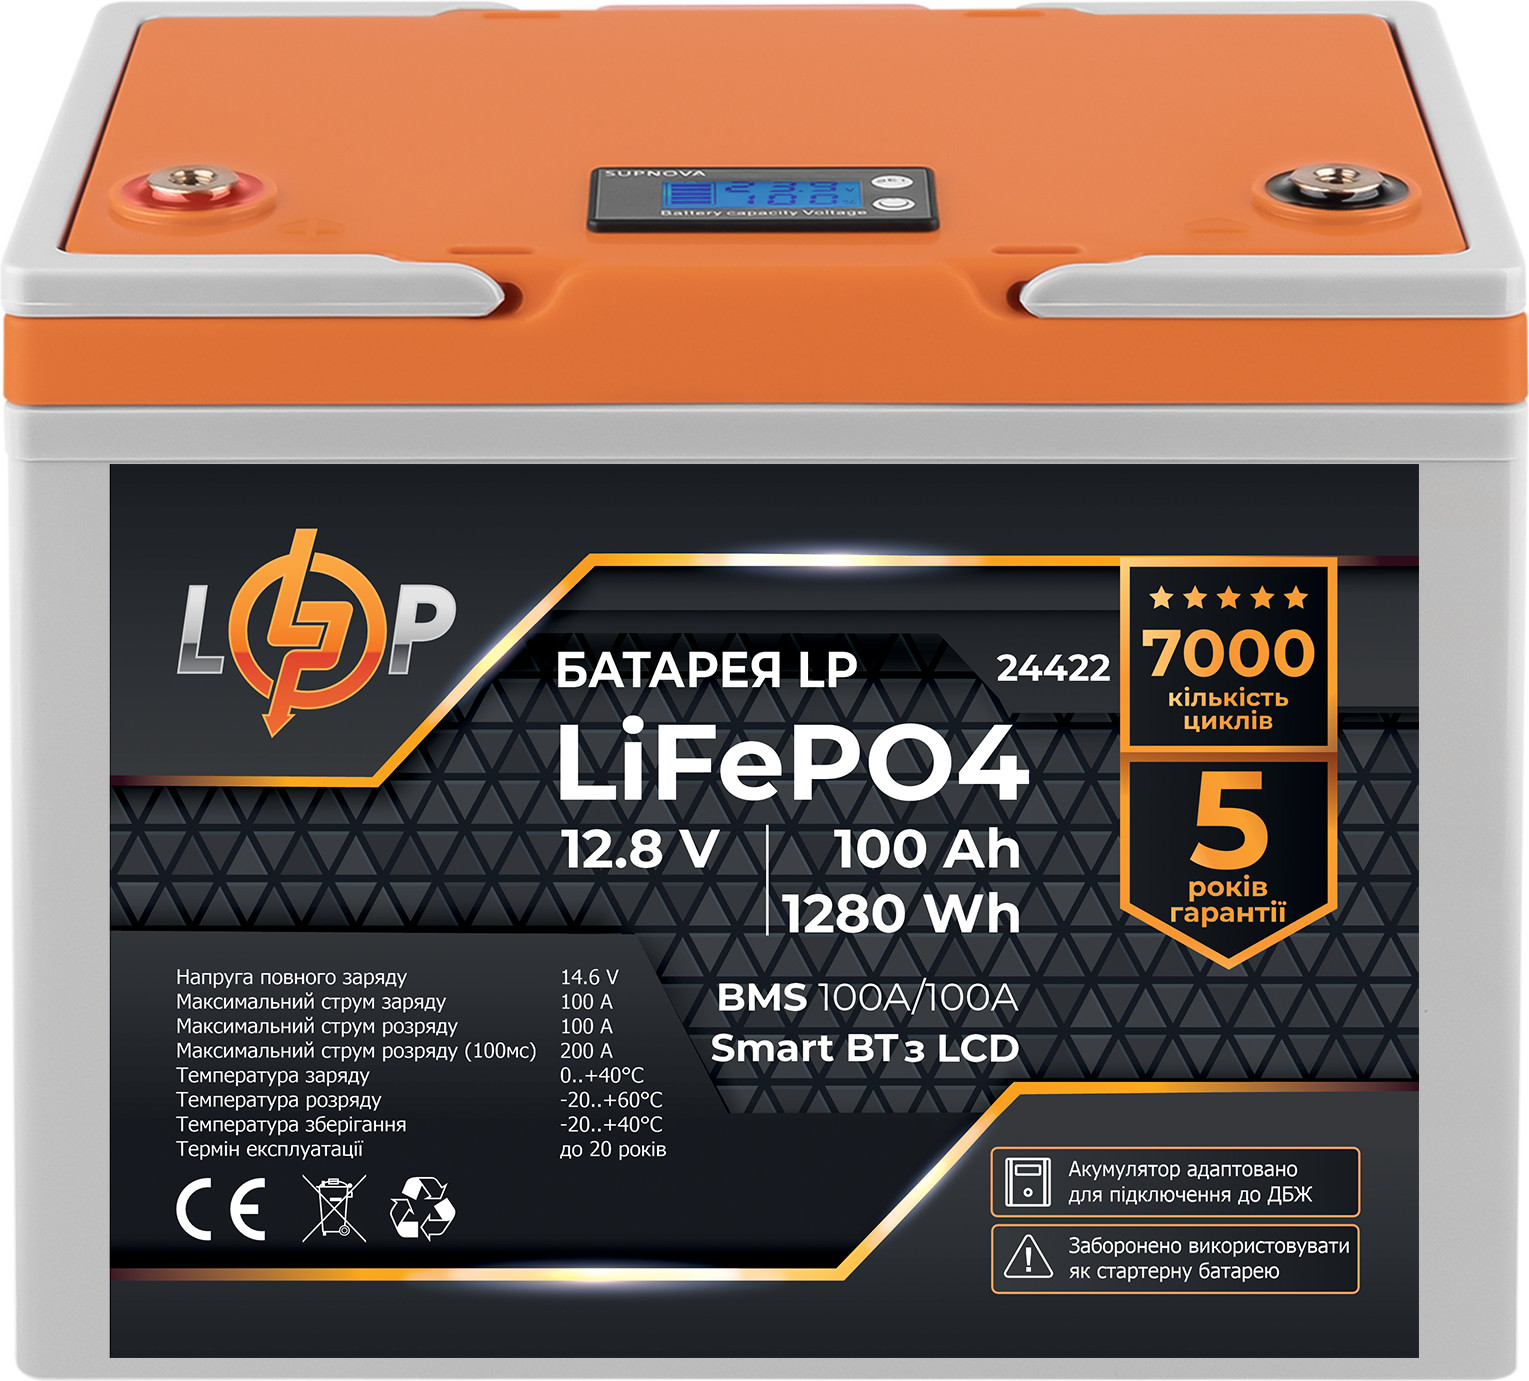 LogicPower LP LiFePO4 12,8V - 100 Ah 1280Wh BMS 100A/100А пластик LCD Smart BT (24422) - зображення 1